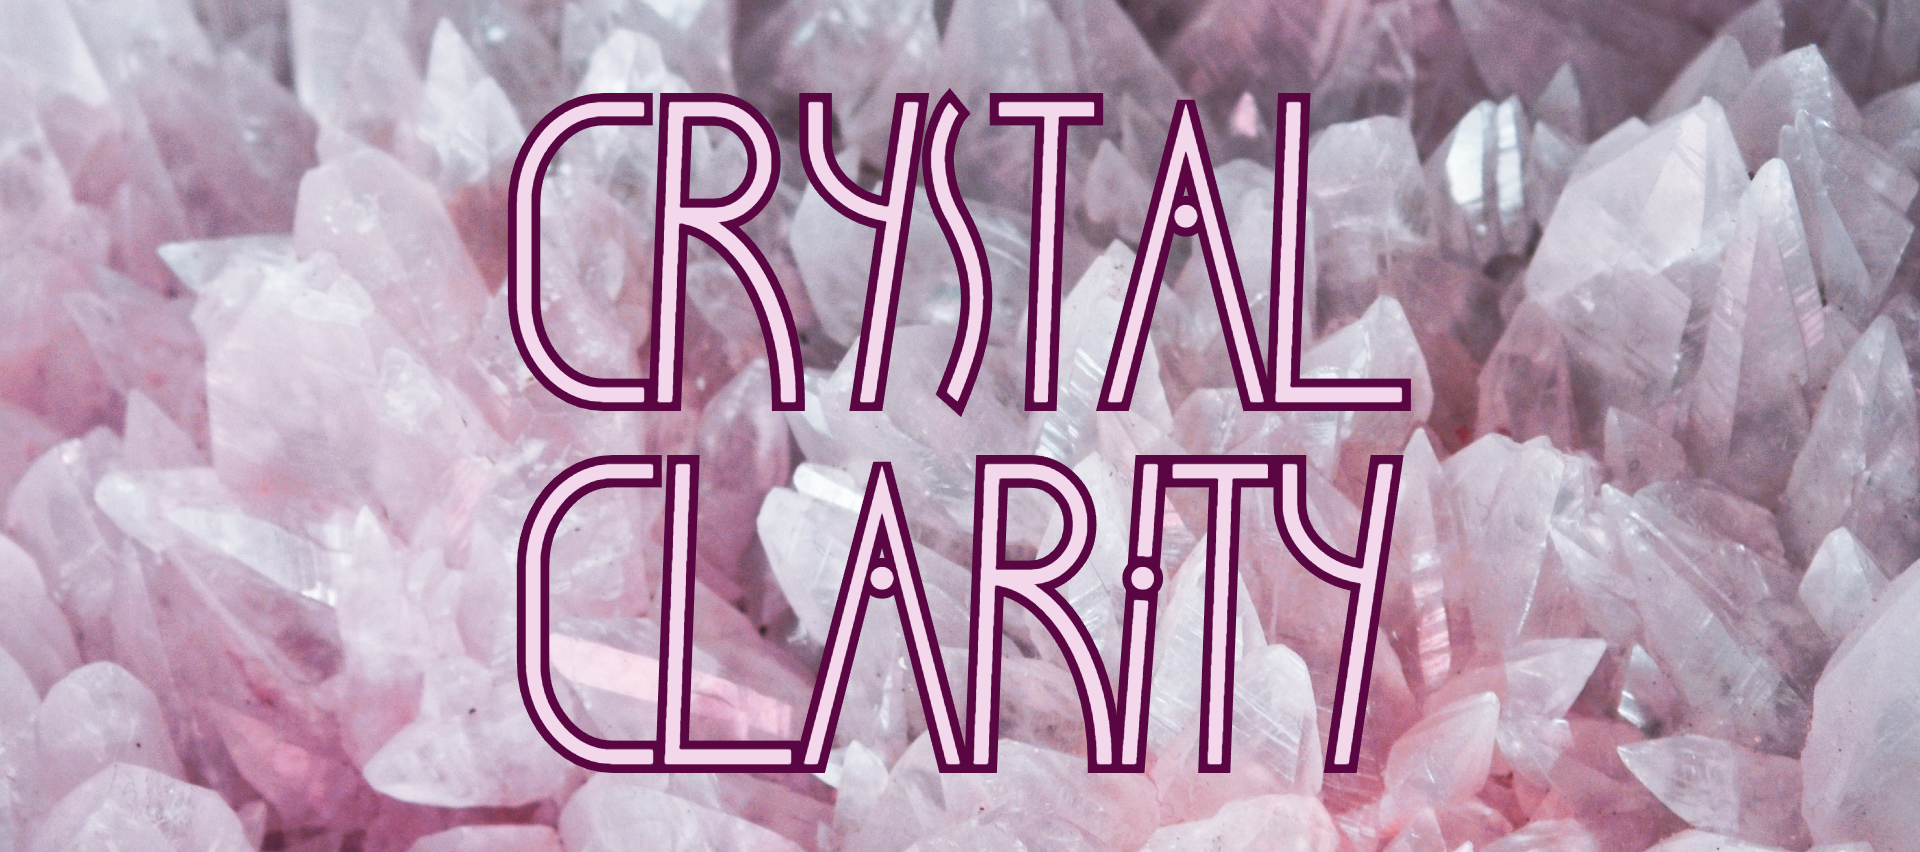 Crystal Clarity #10